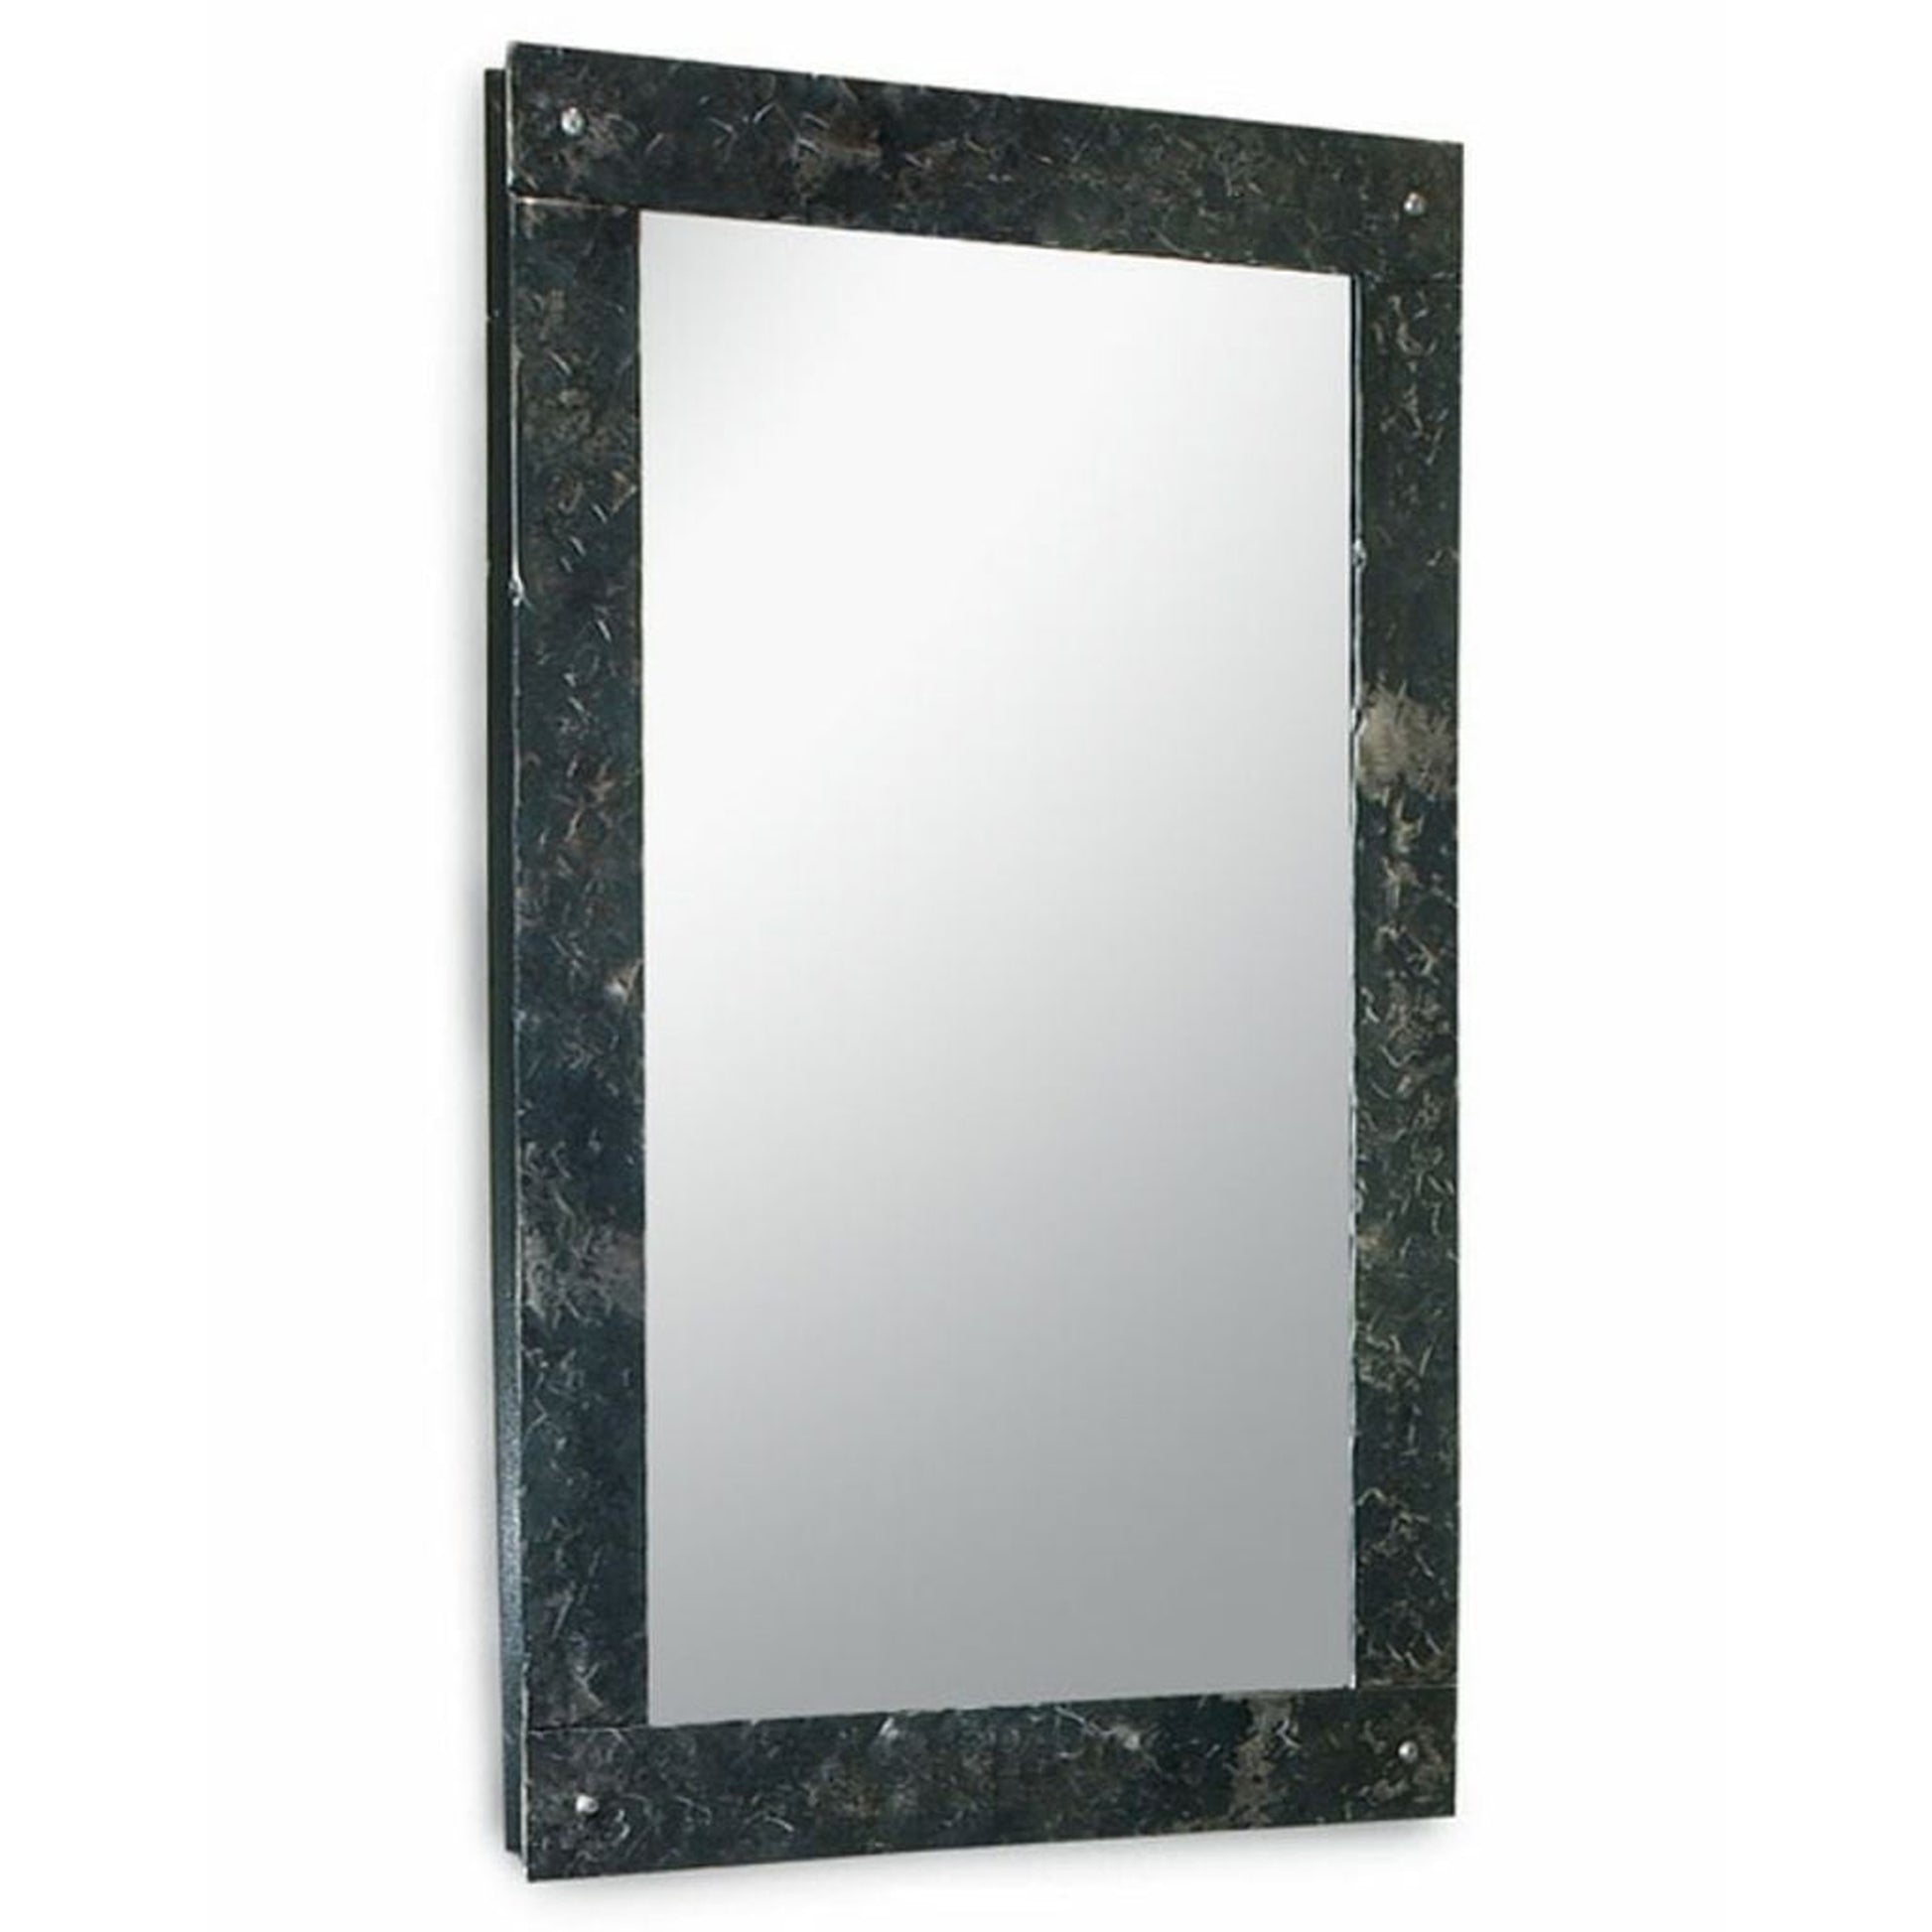 Stone County Ironworks Studio Series 23" x 29" Woodland Brown Finish Rectangular Mirror